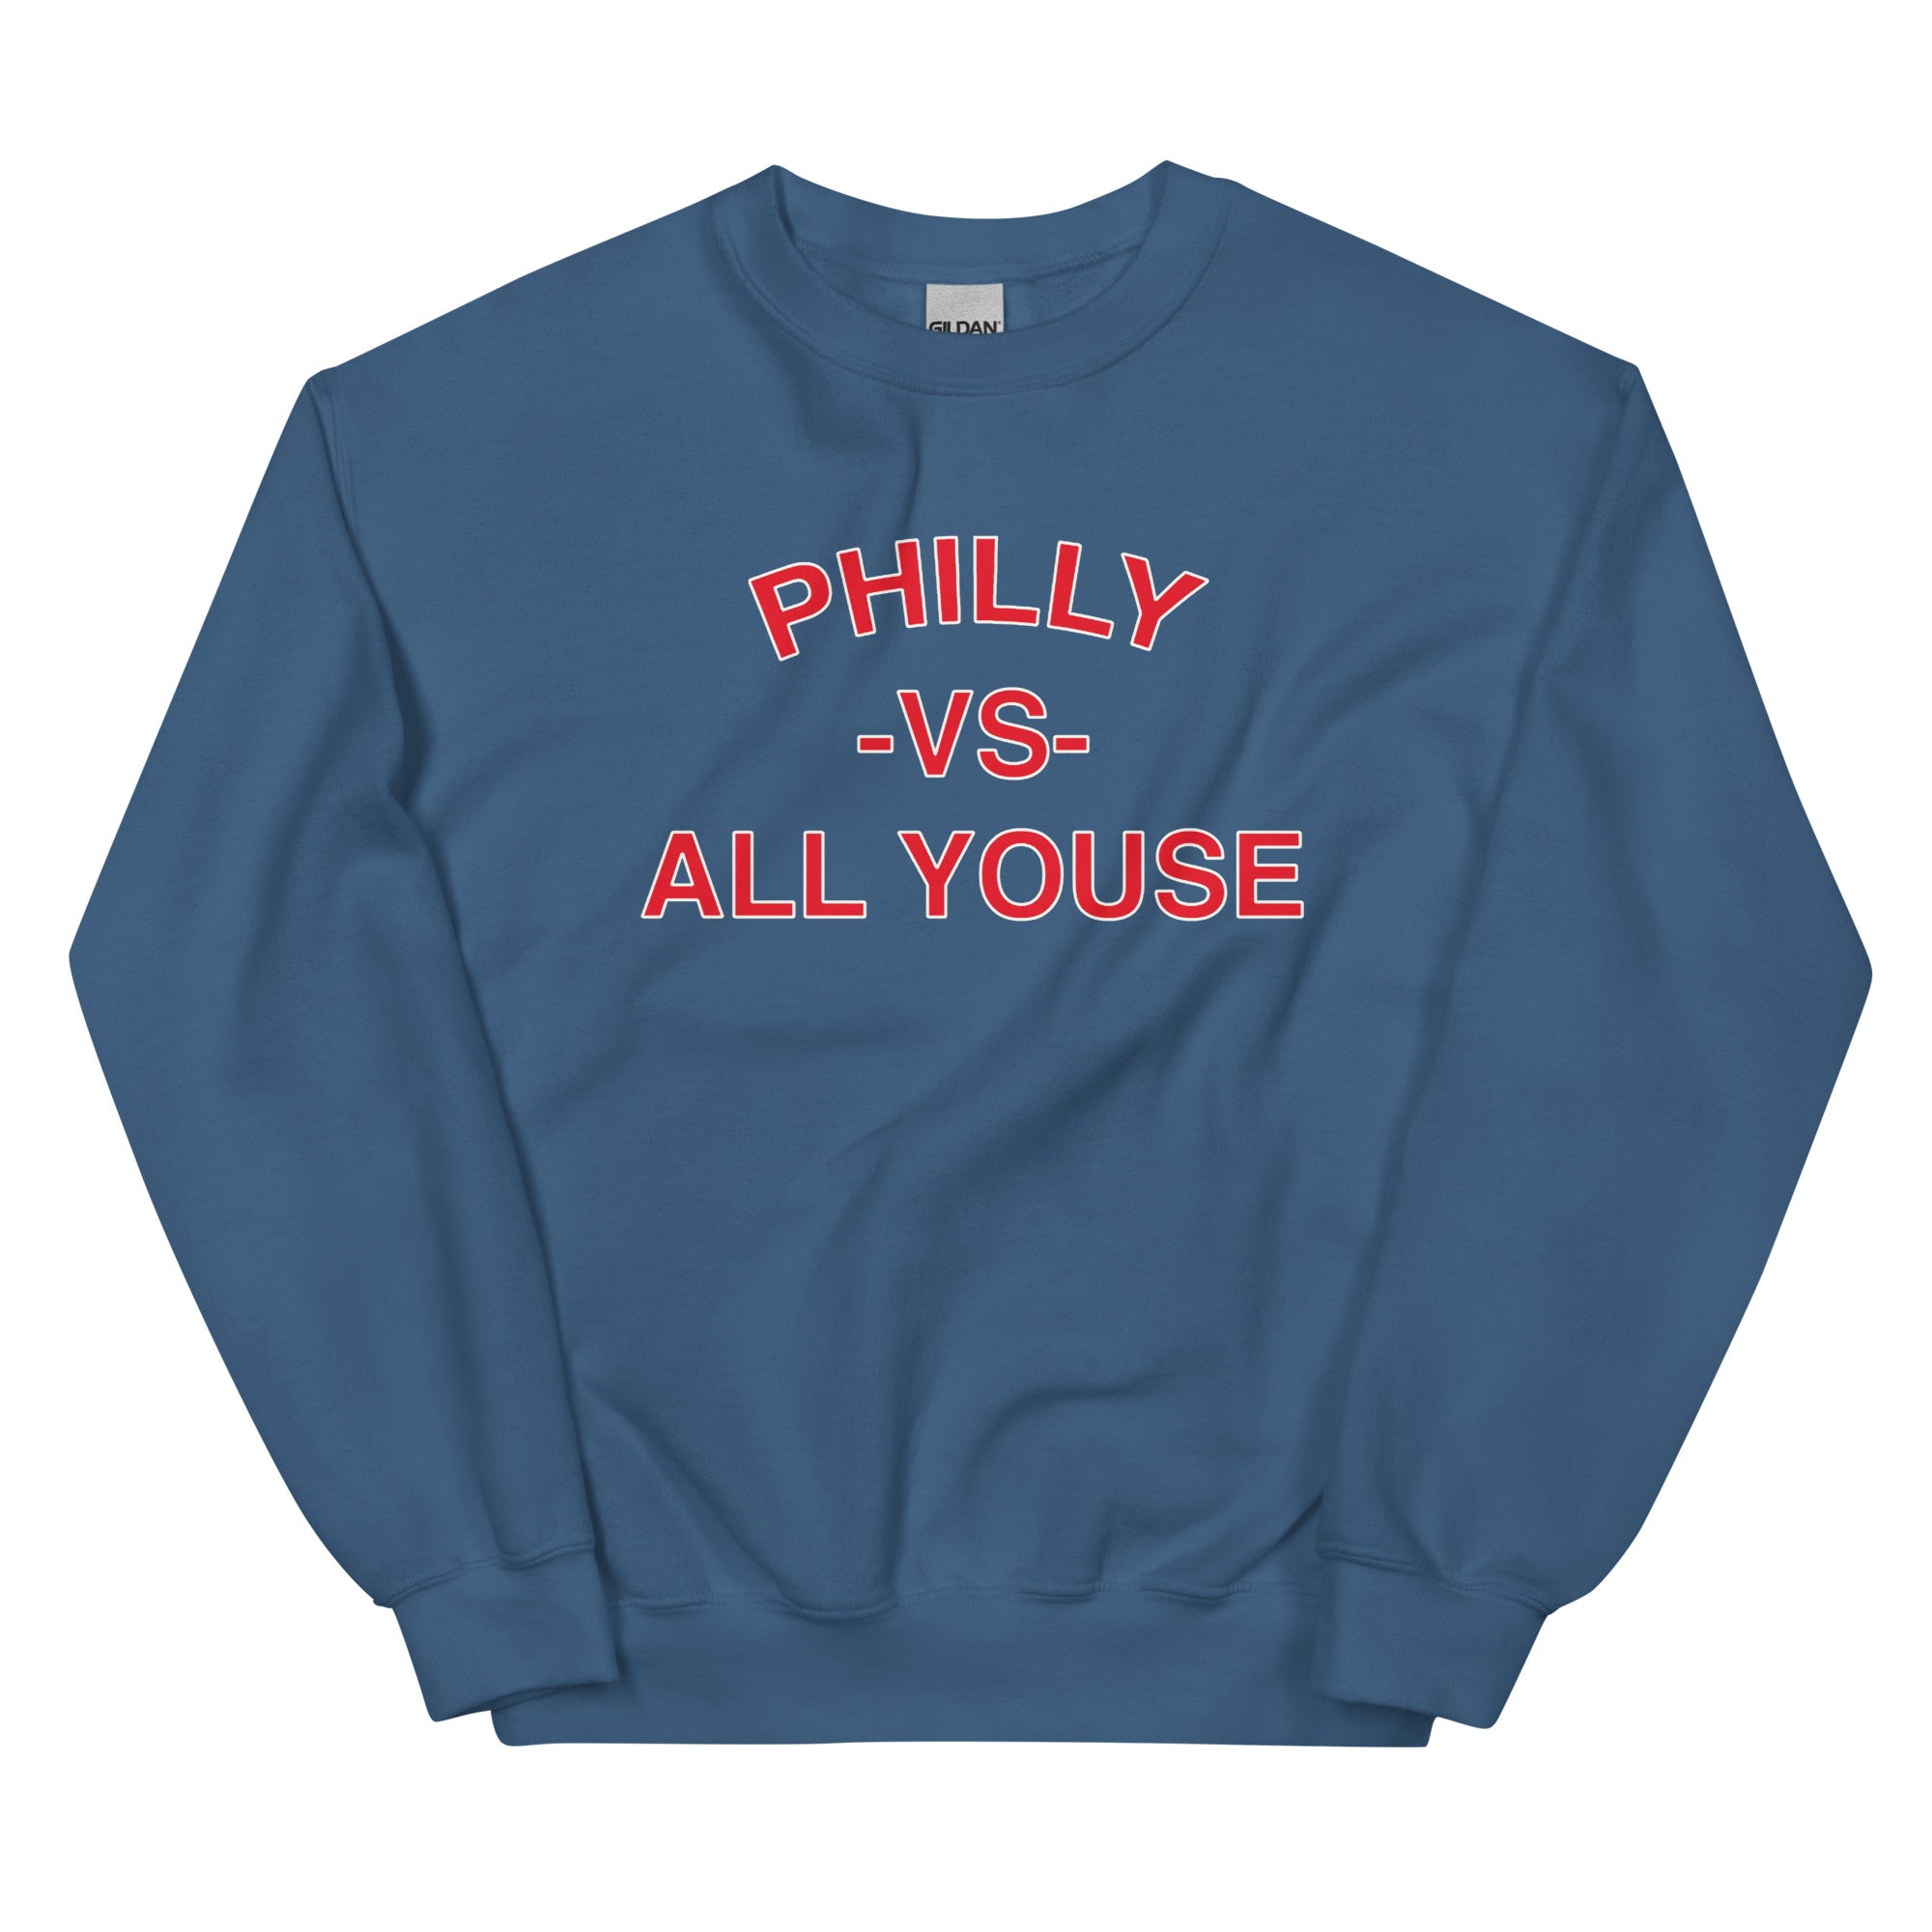 Philadelphia vs everybody philly vs all youse indigo blue sweatshirt Phillygoat